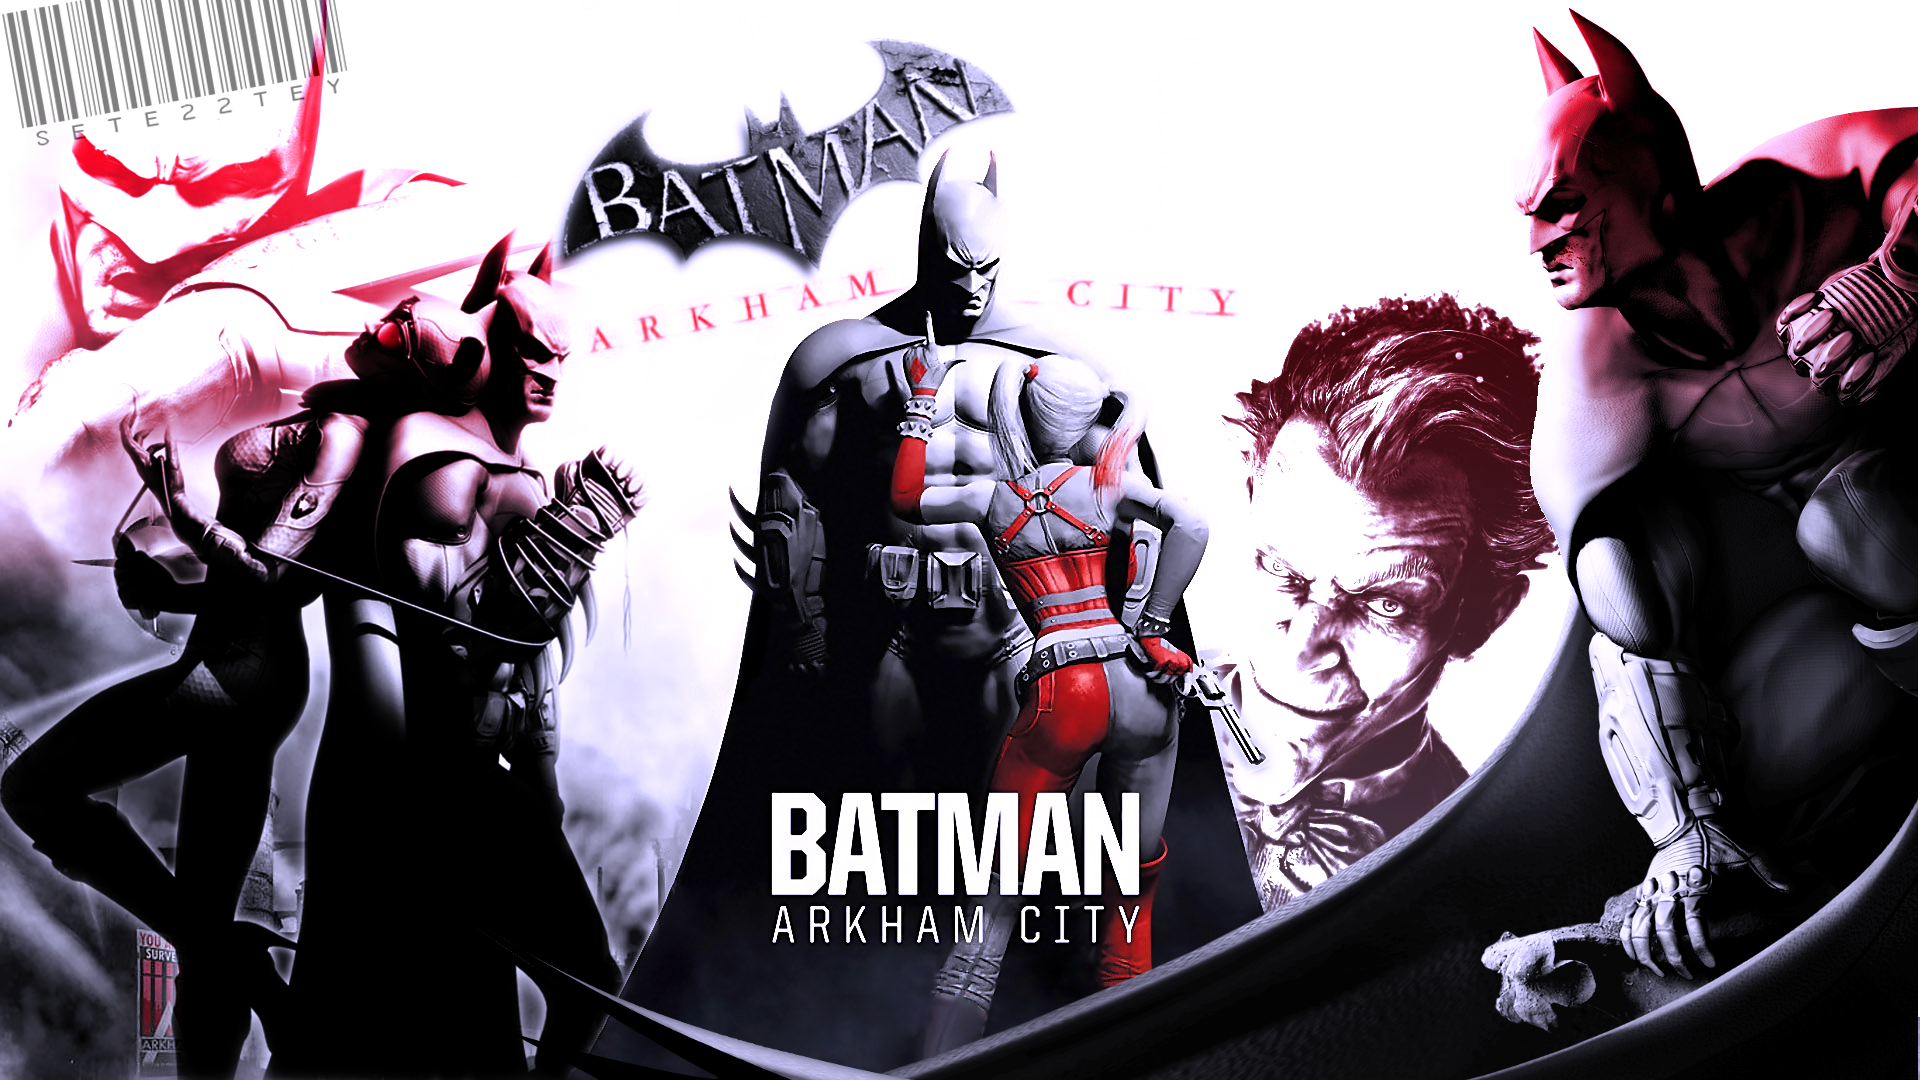 General 1920x1080 Batman Batman: Arkham City Joker Harley Quinn Catwoman video games superhero DC Comics